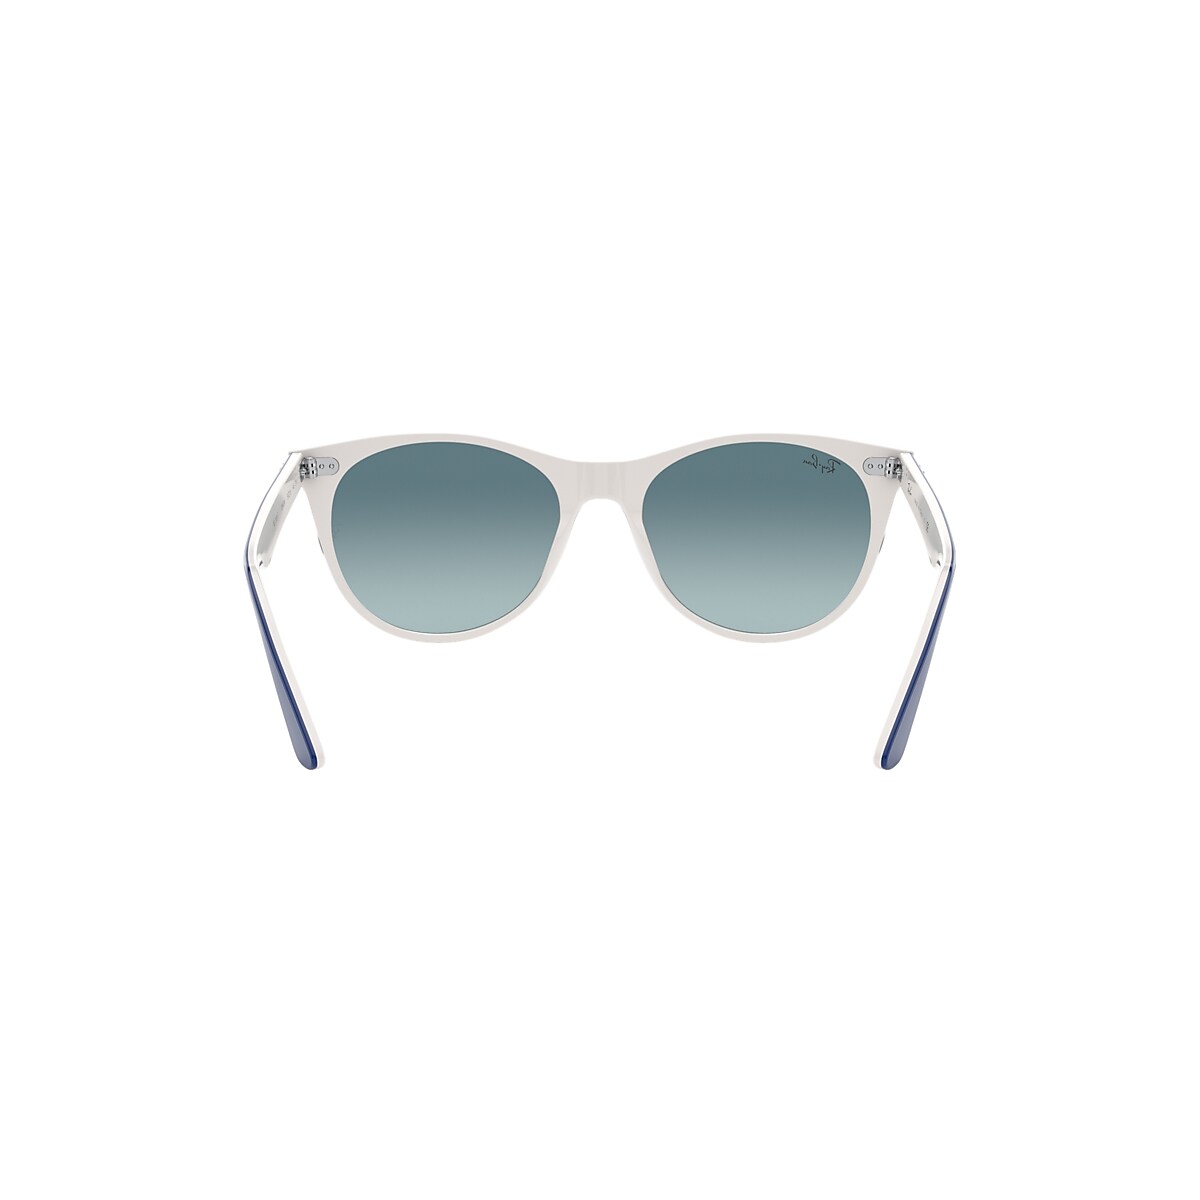 Treatment Memorize Walter Cunningham Wayfarer Ii Classic Sunglasses in Blue and Blue | Ray-Ban®